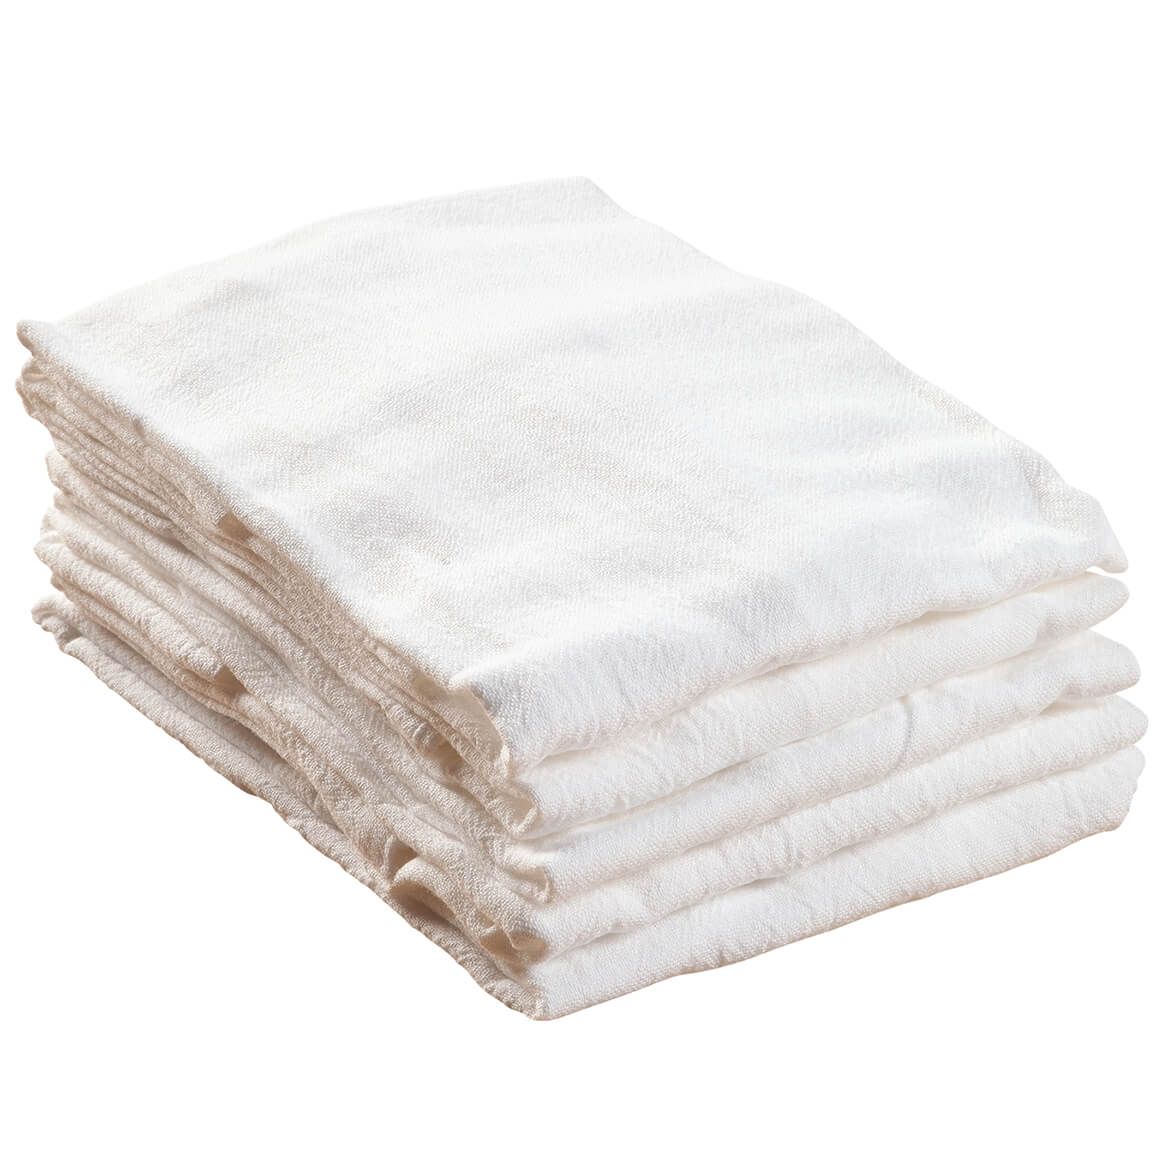 Jumbo Flour Sack Towels S/5 + '-' + 370152